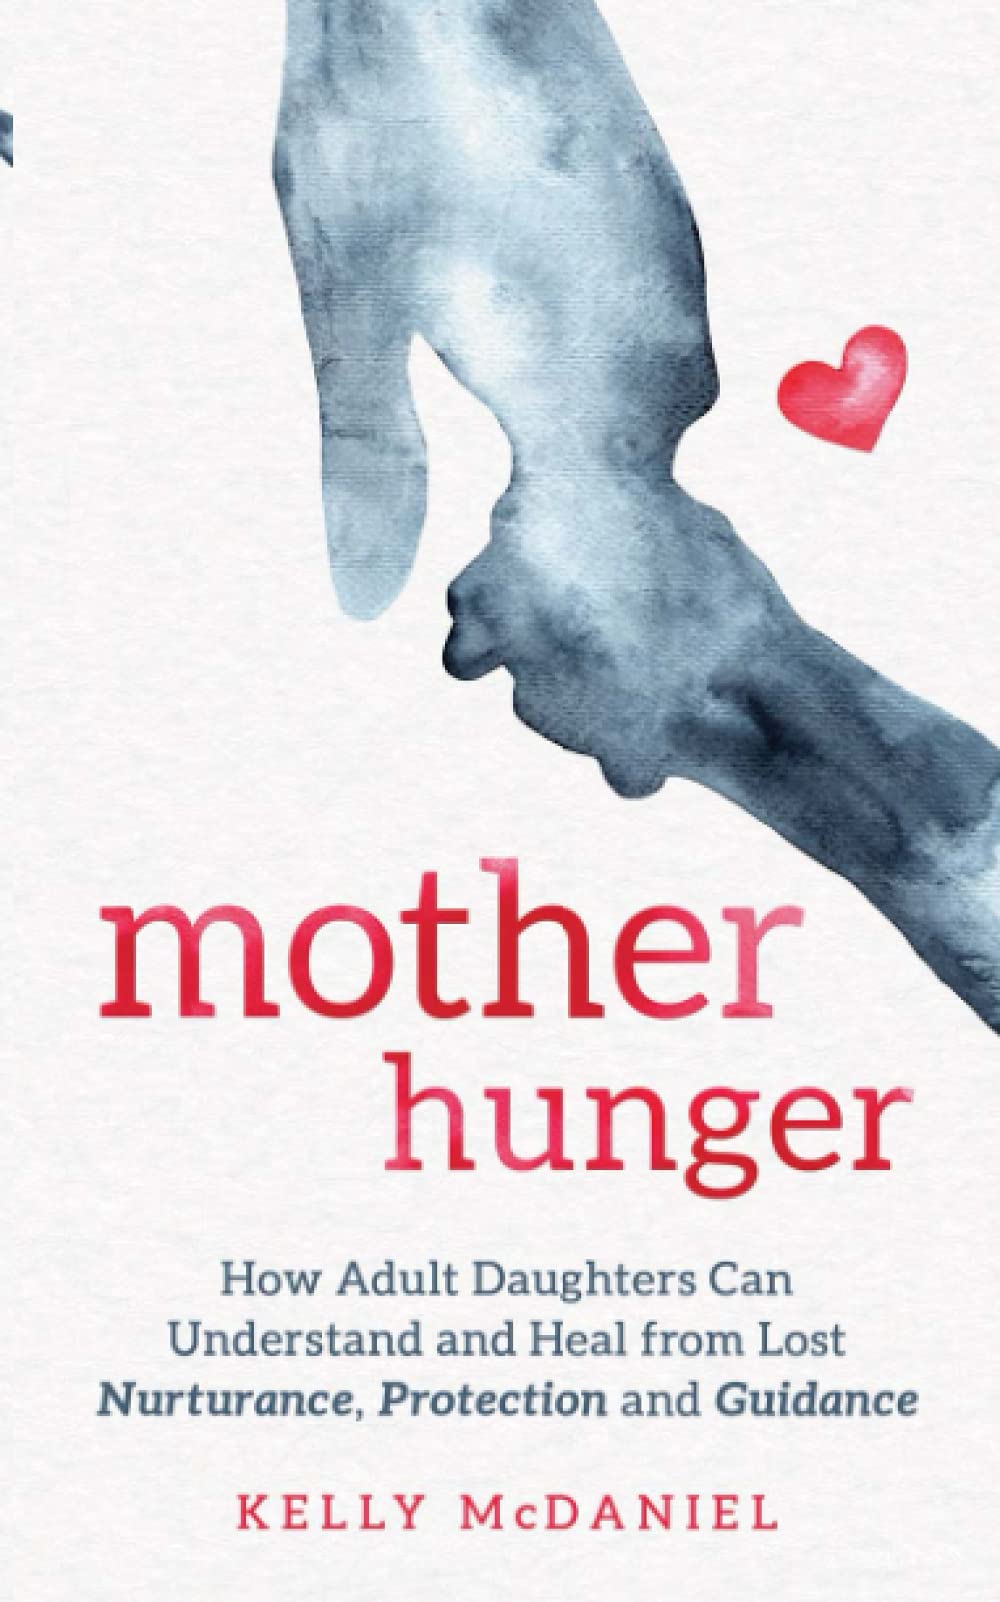 Mother Hunger